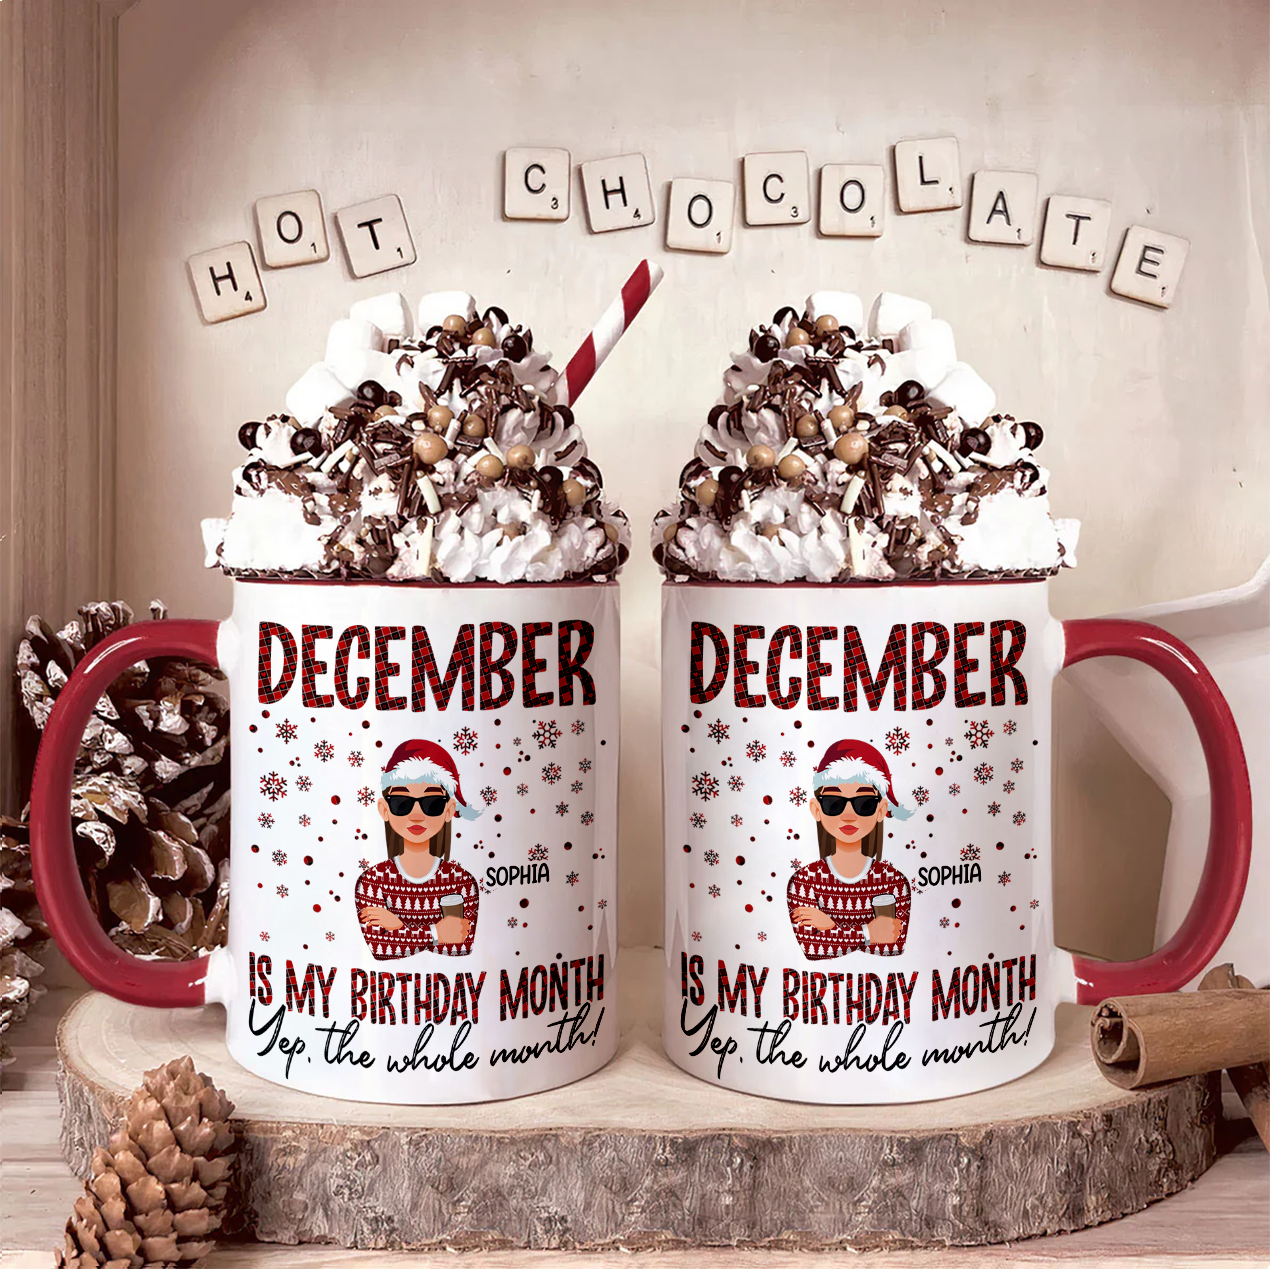 December Birthday Mug, Personalized Birthday Mug, Customized Mug For Birthday, Happy Birthday Personalized Mug